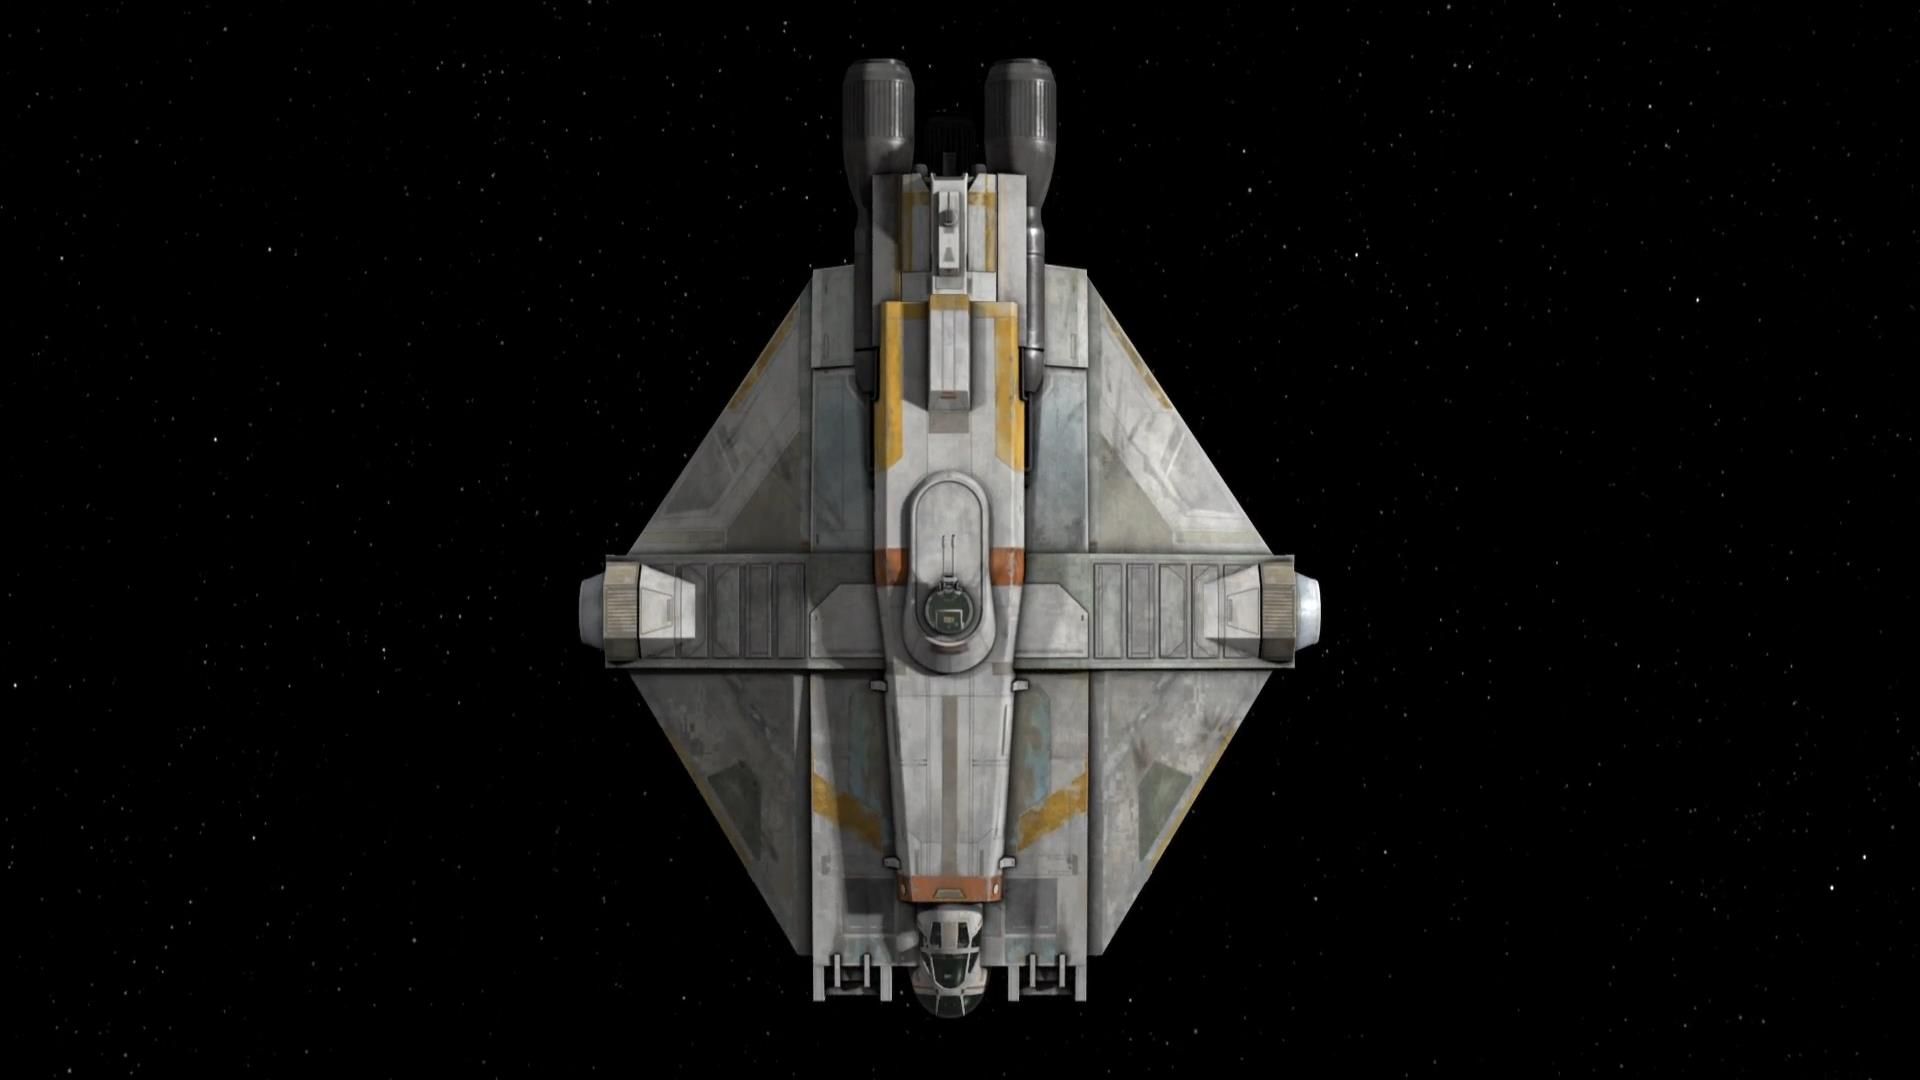 Star wars ships, Star wars rebels, Star wars